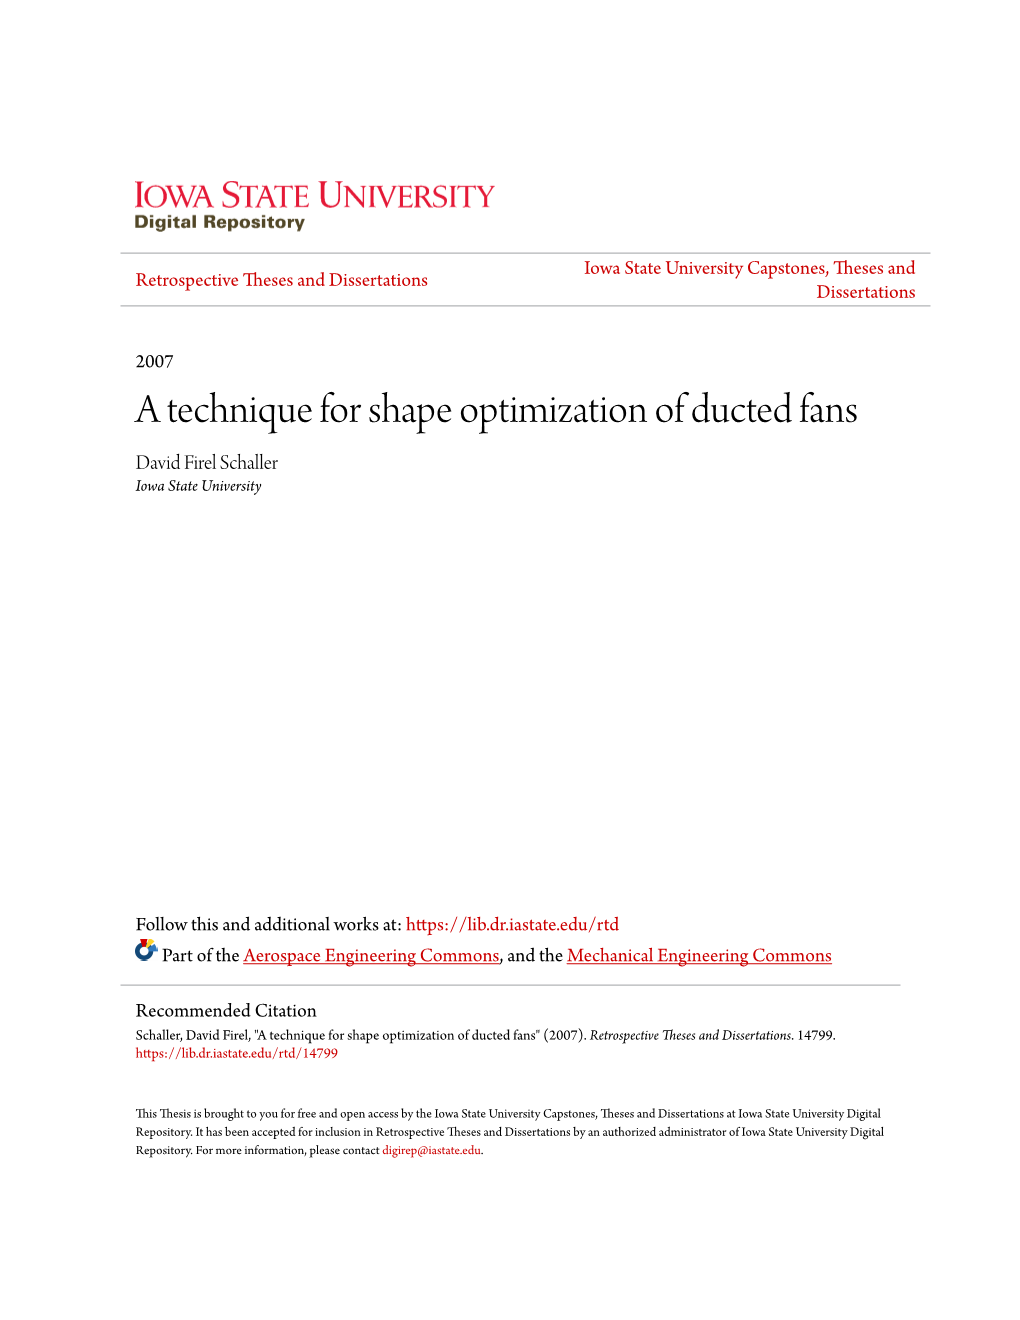 A Technique for Shape Optimization of Ducted Fans David Firel Schaller Iowa State University